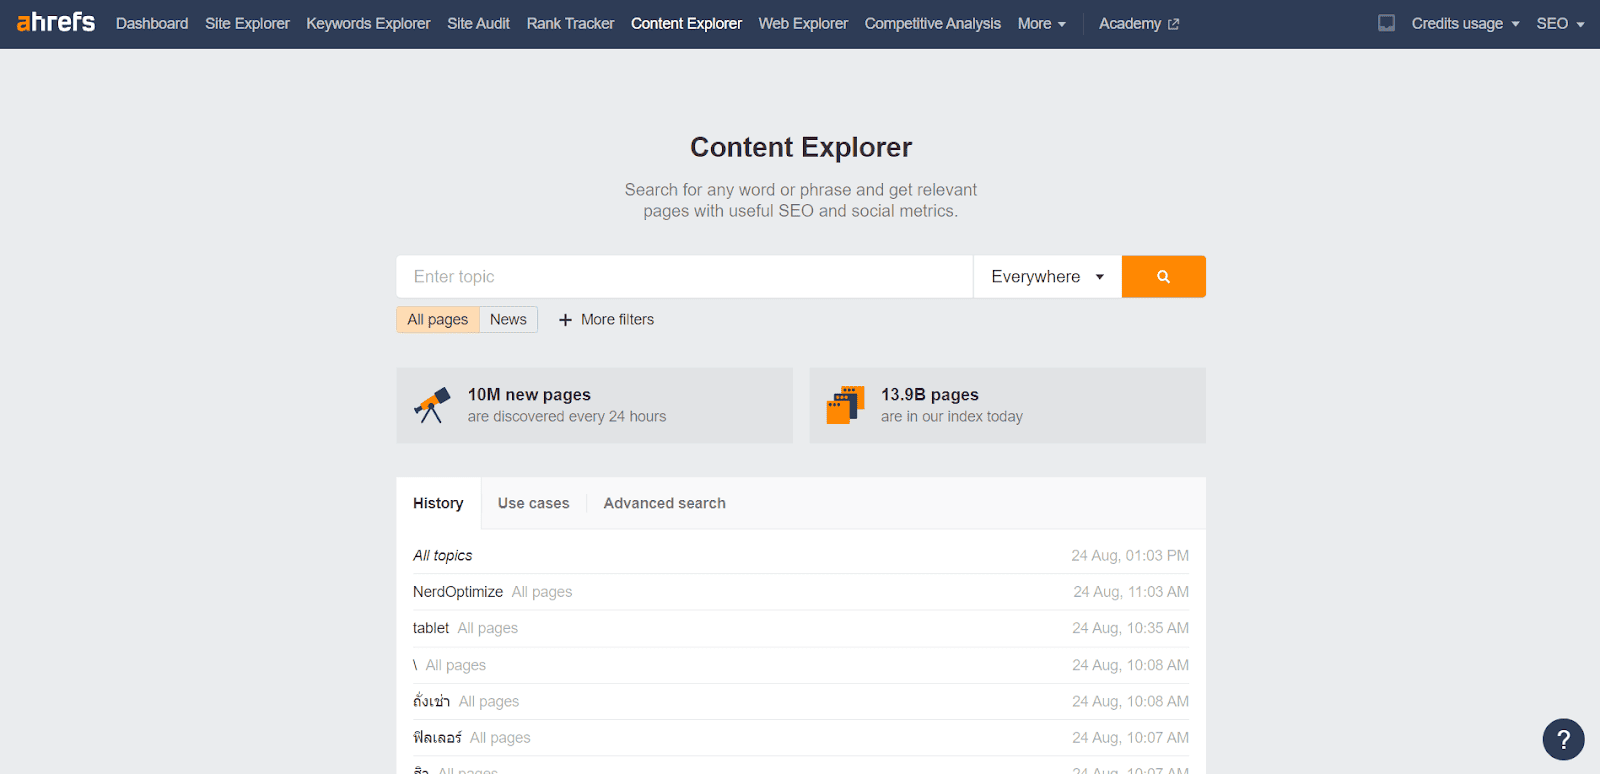 Content Explorer